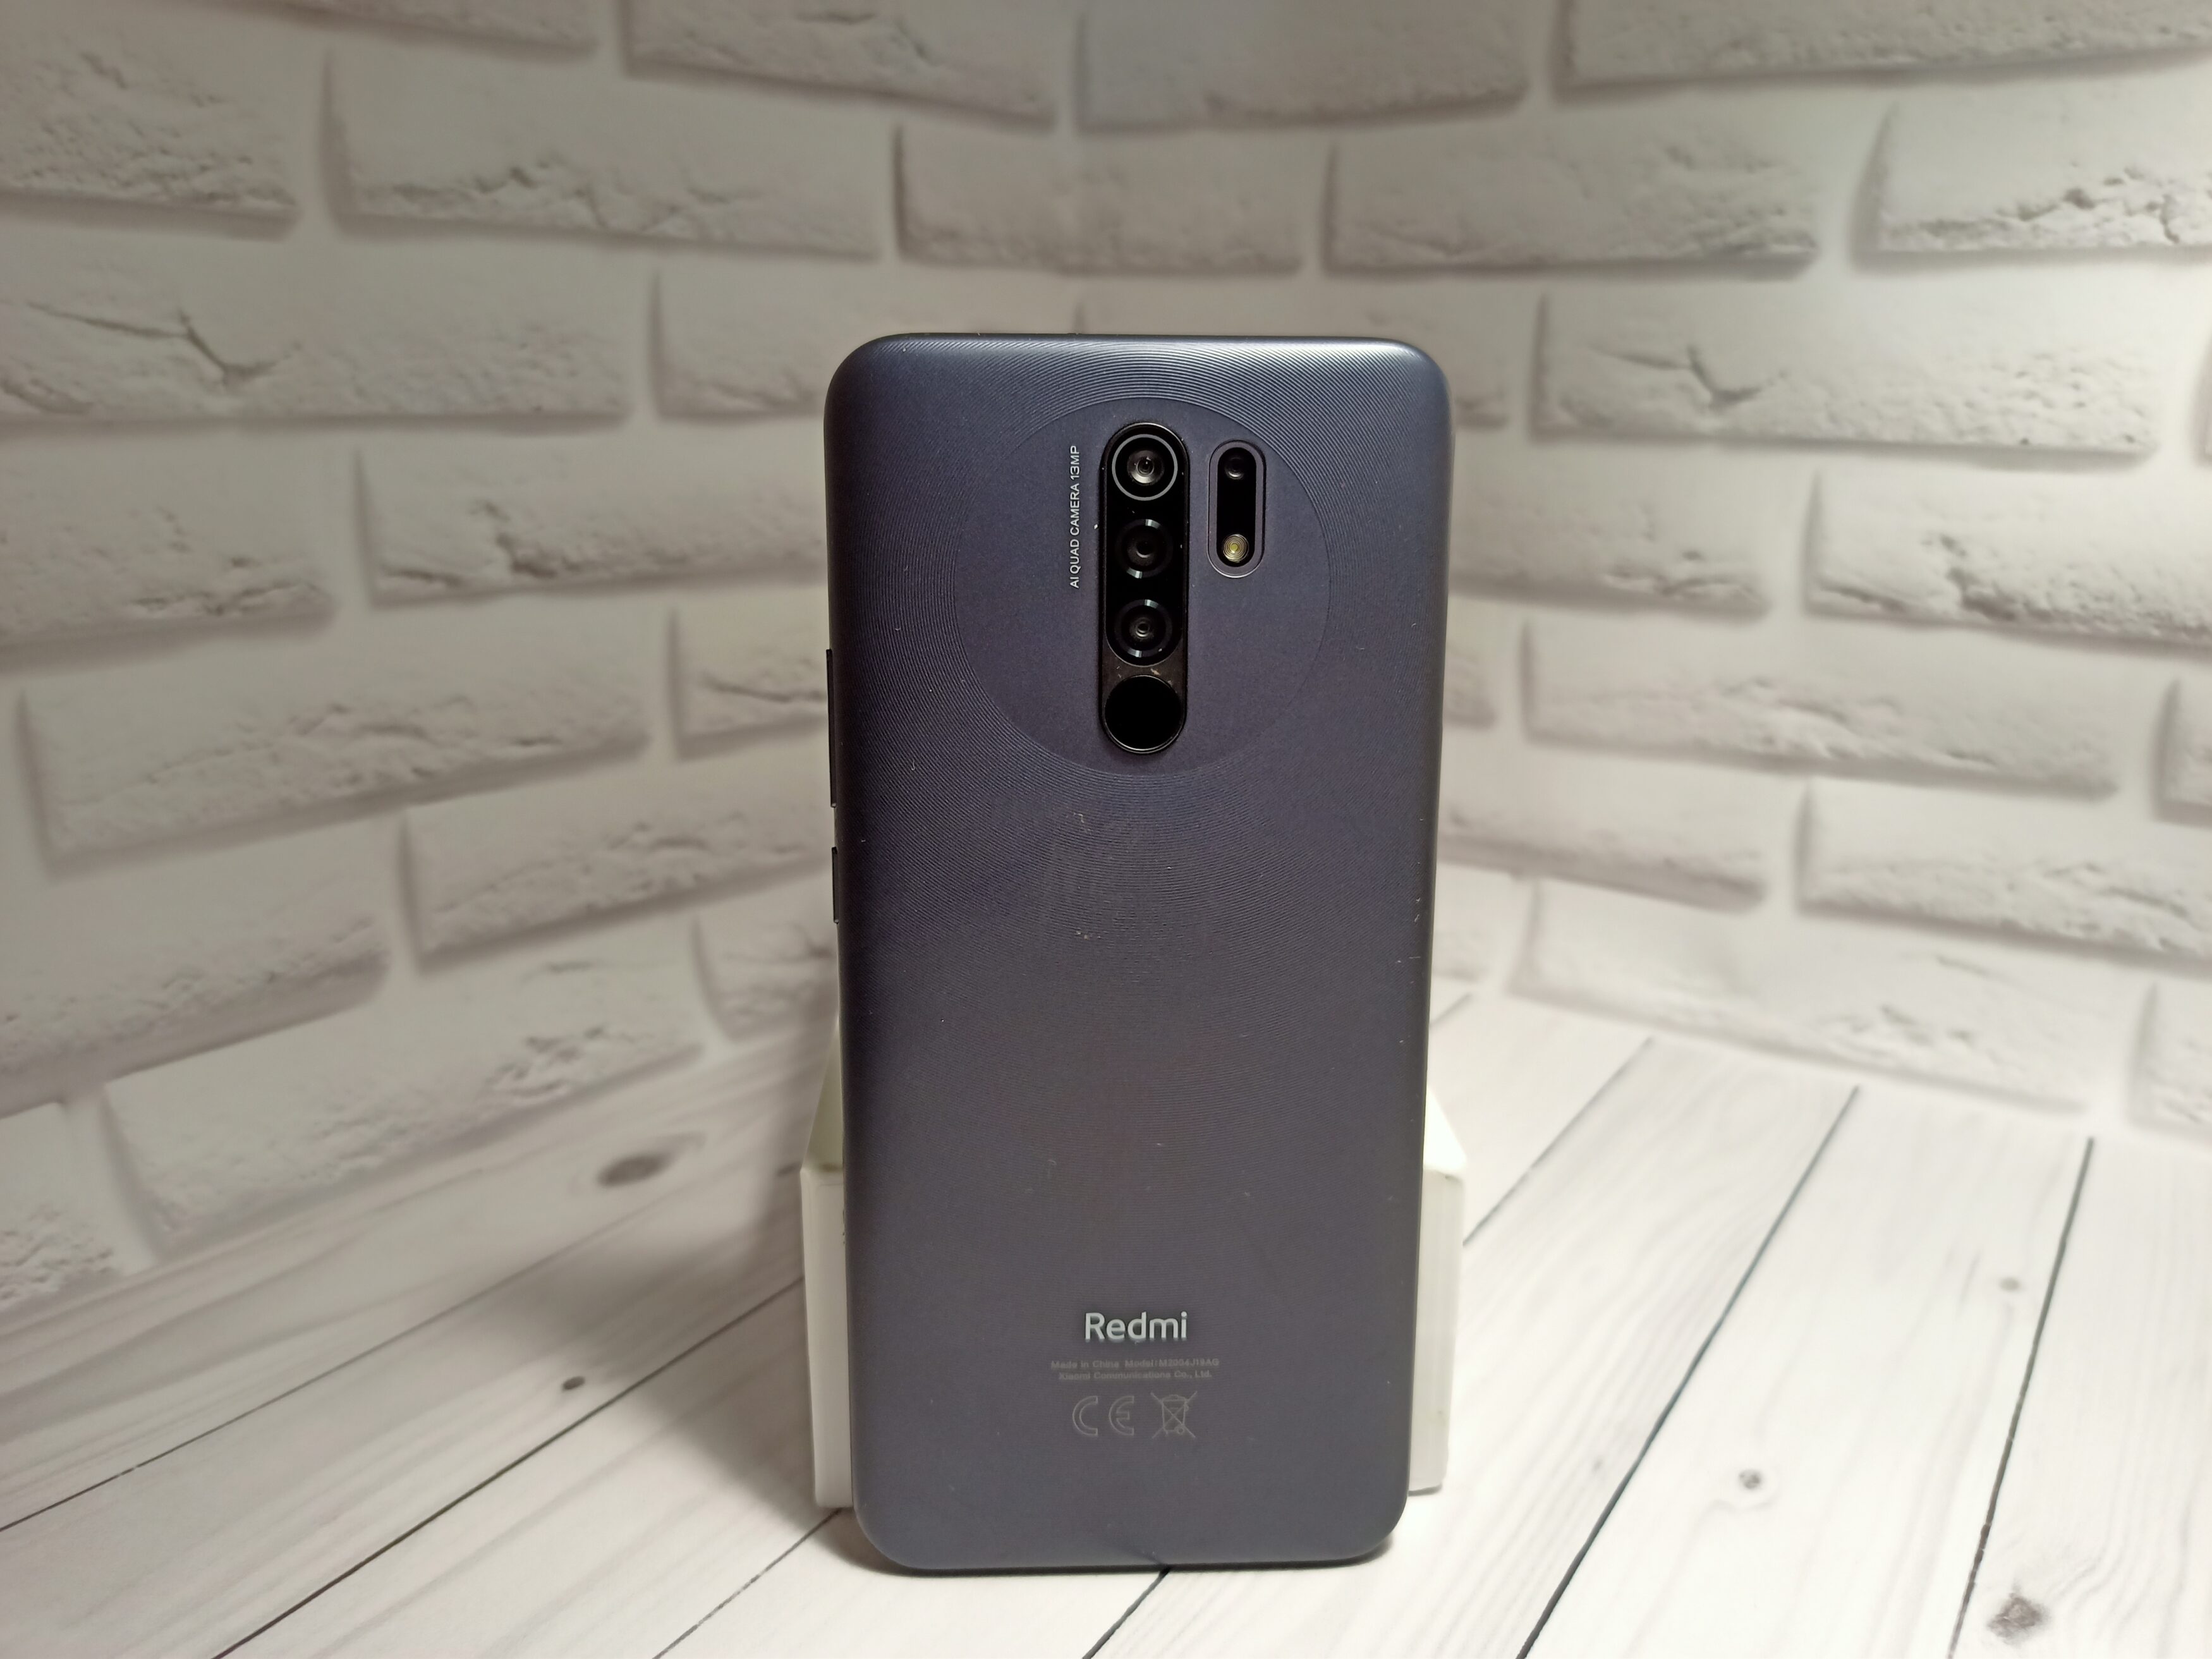 Xiaomi Redmi 9 3 32gb Purple